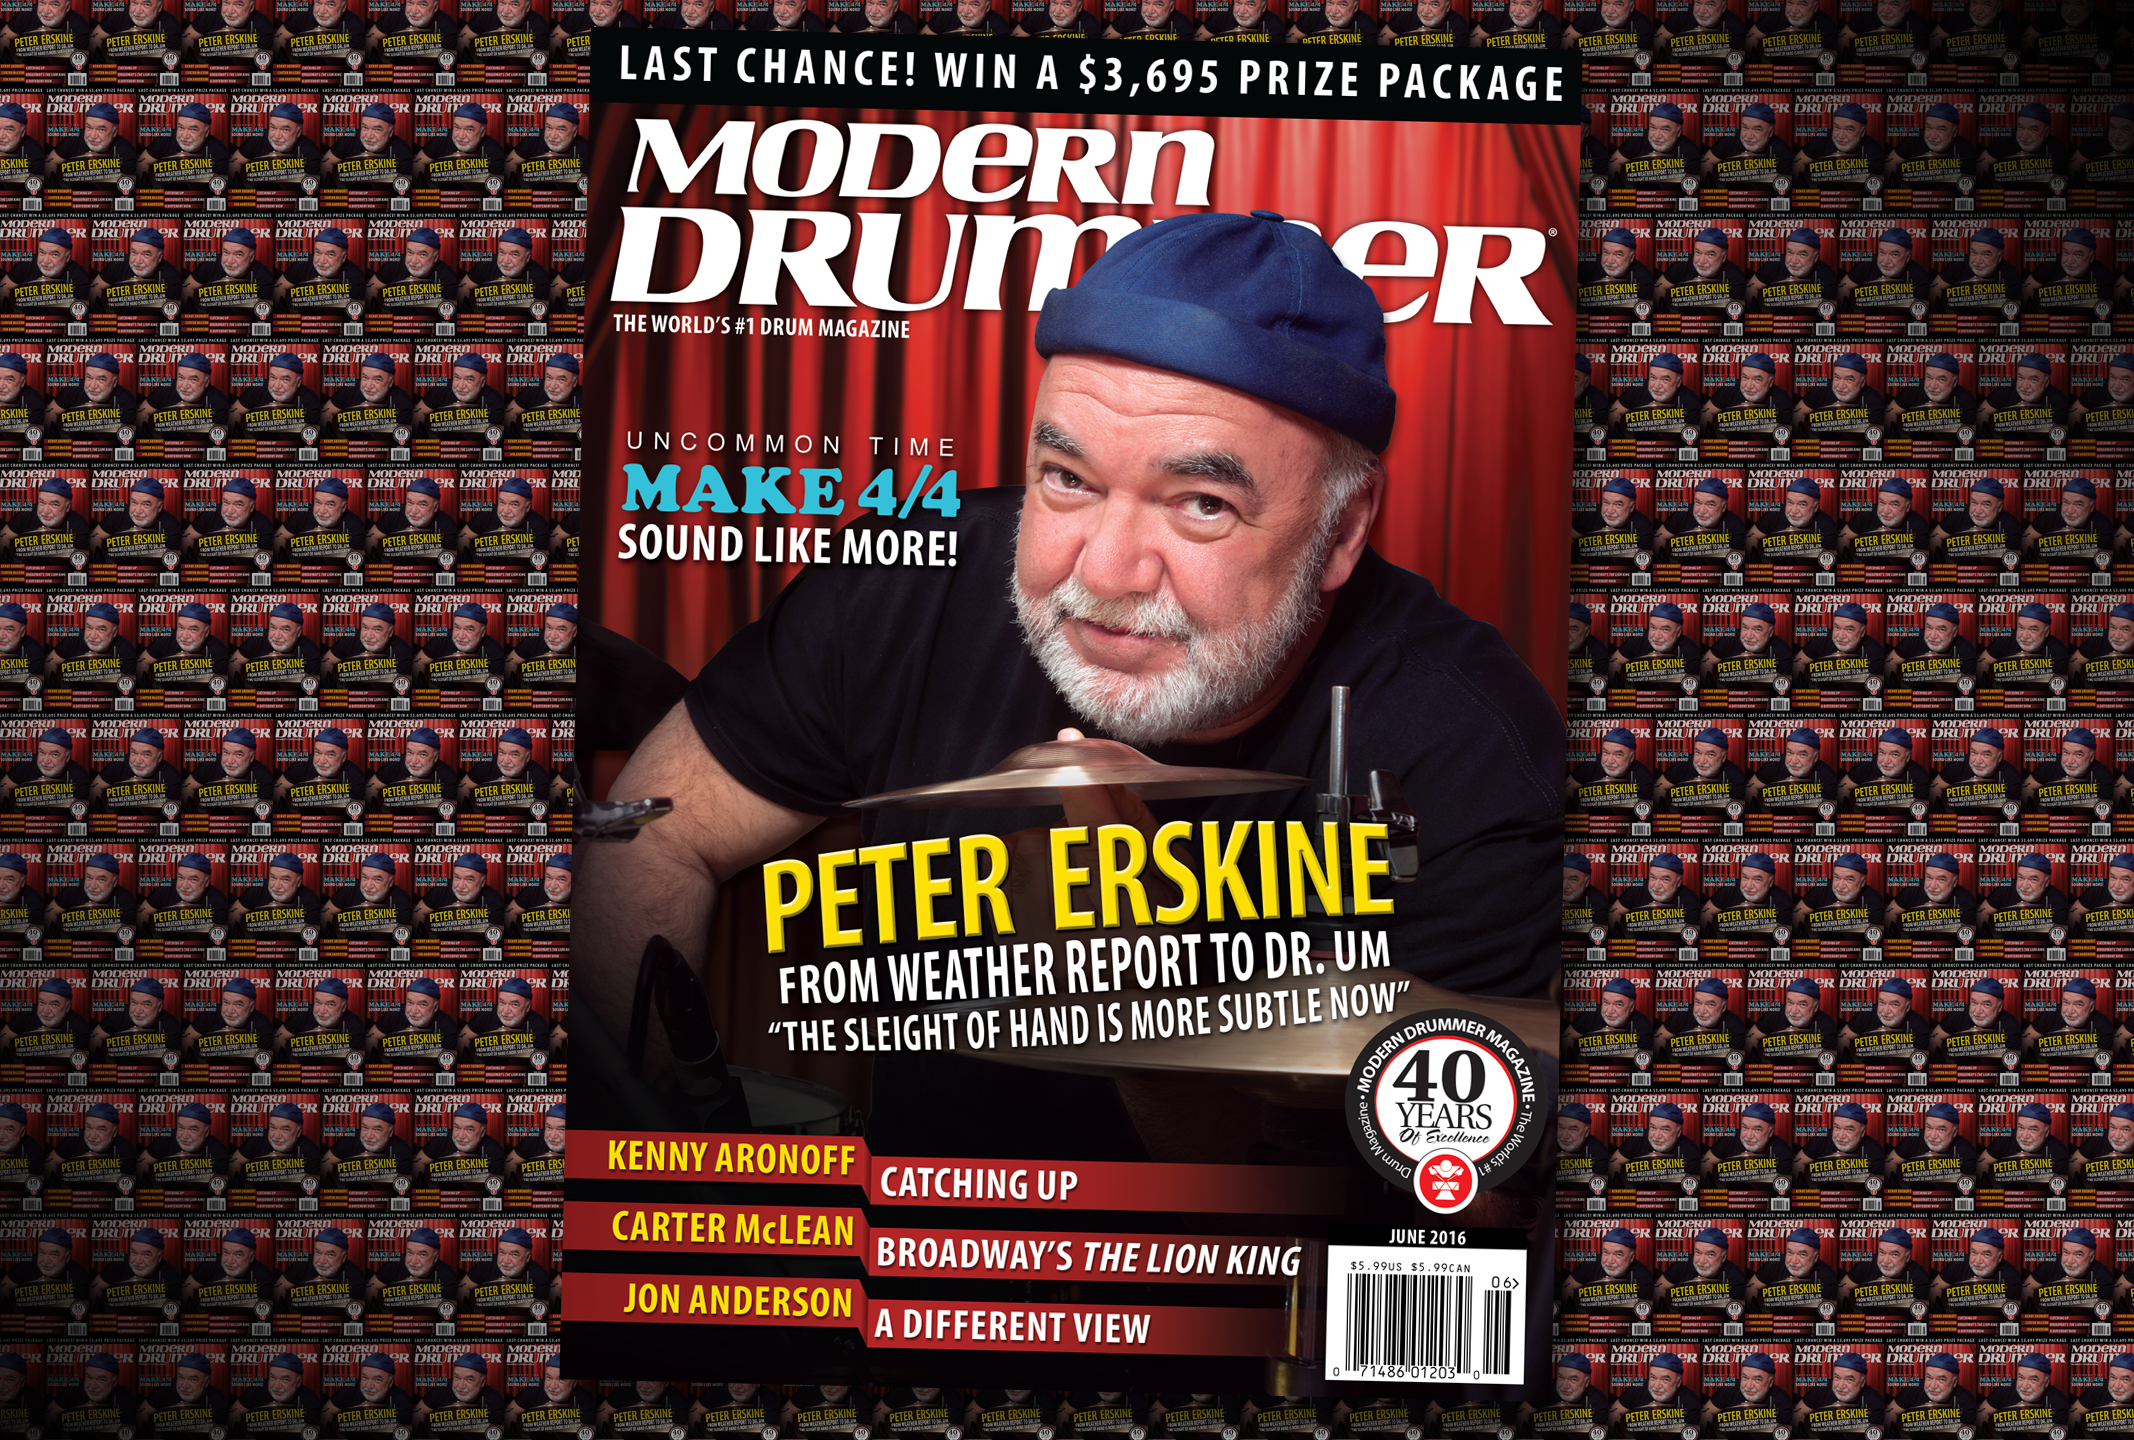 June 2016 Issue of Modern Drummer magazine featuring Peter Erskine